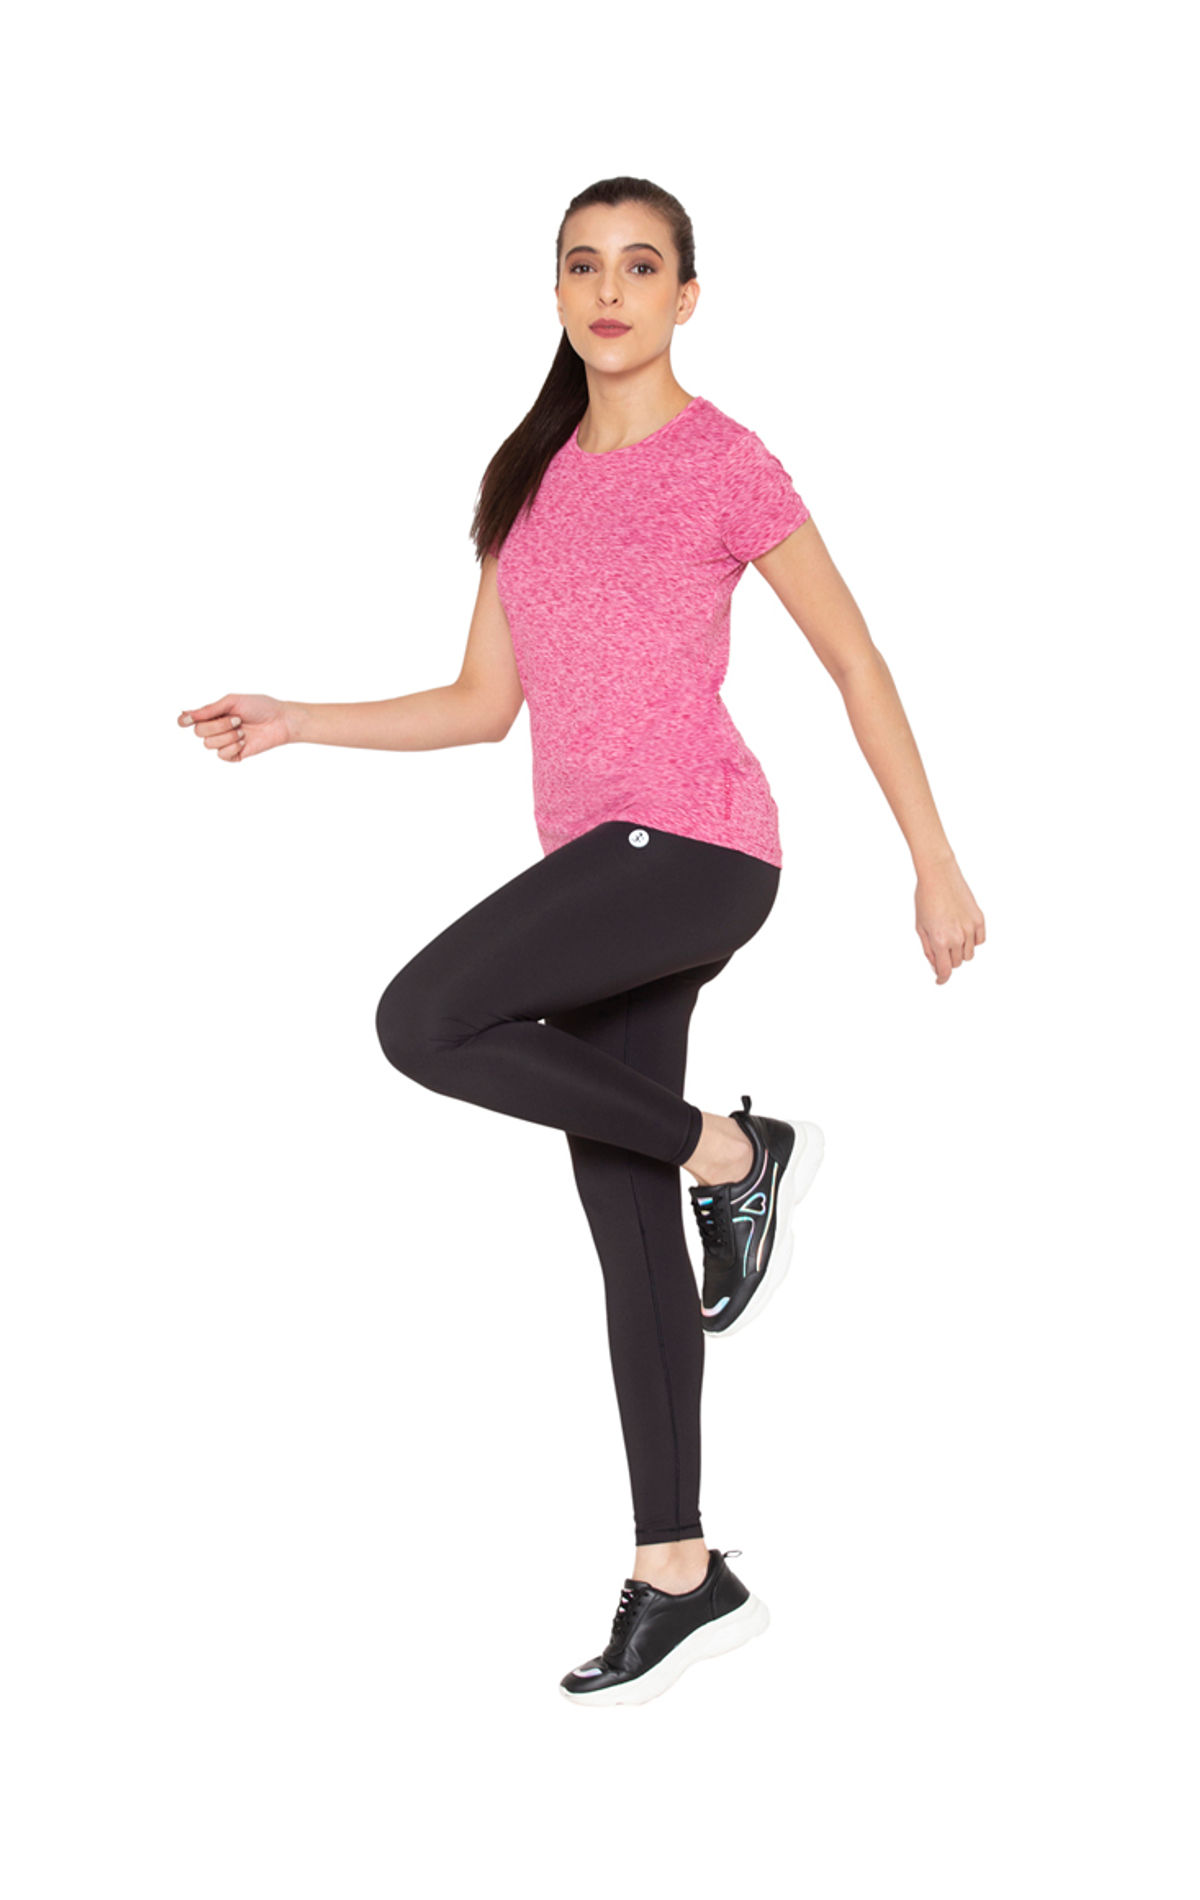 Bodyactive Black Yoga Pants with Pockets for Women, High Waist Workout Tummy  Control Pants-LL26-BLK/PNK